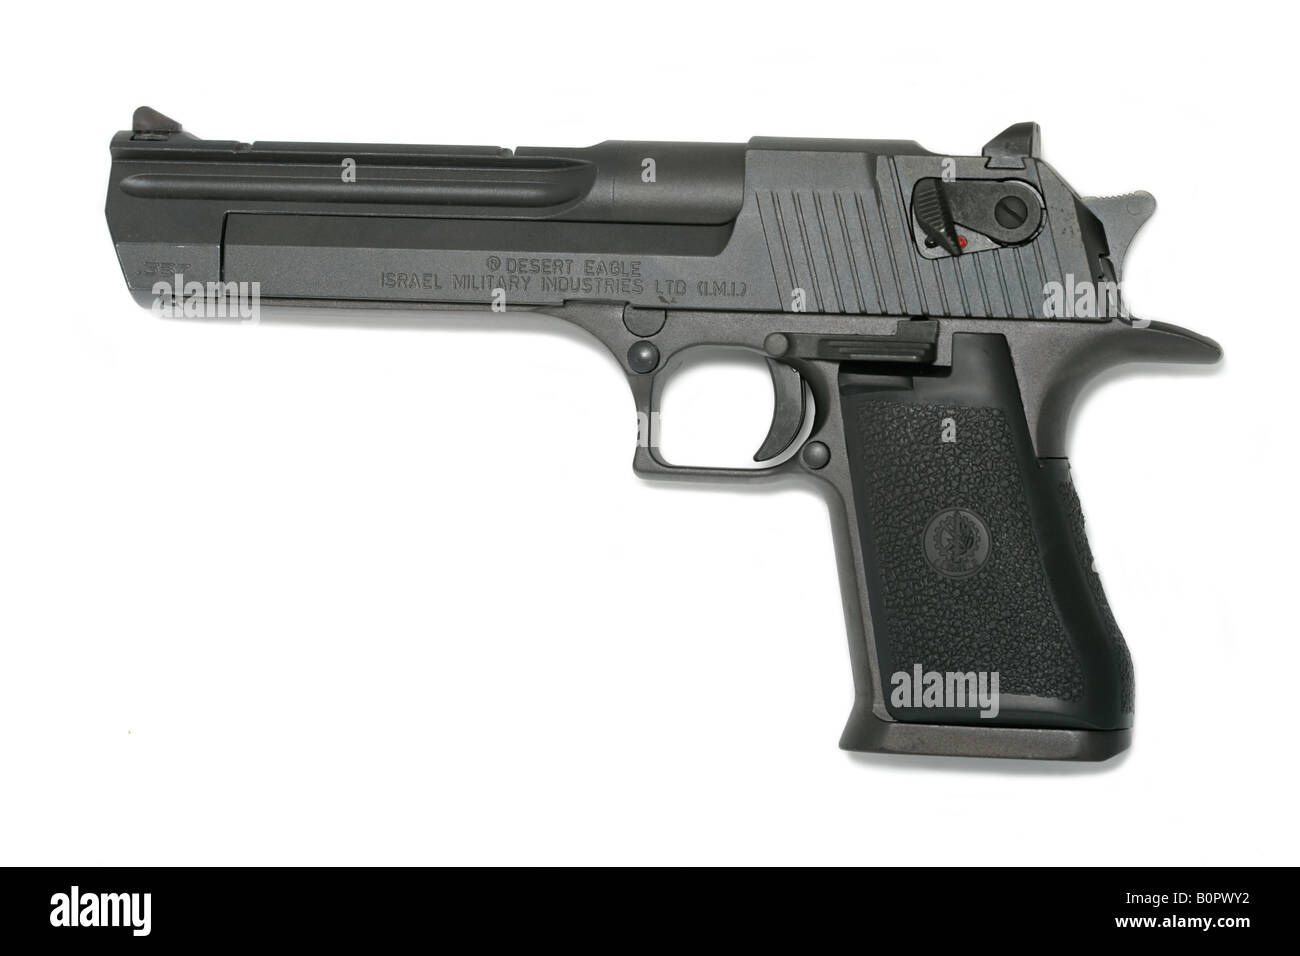 Desert Eagle 357 Israel Military Industries Ltd pistol handgun hand gun Stock Photo